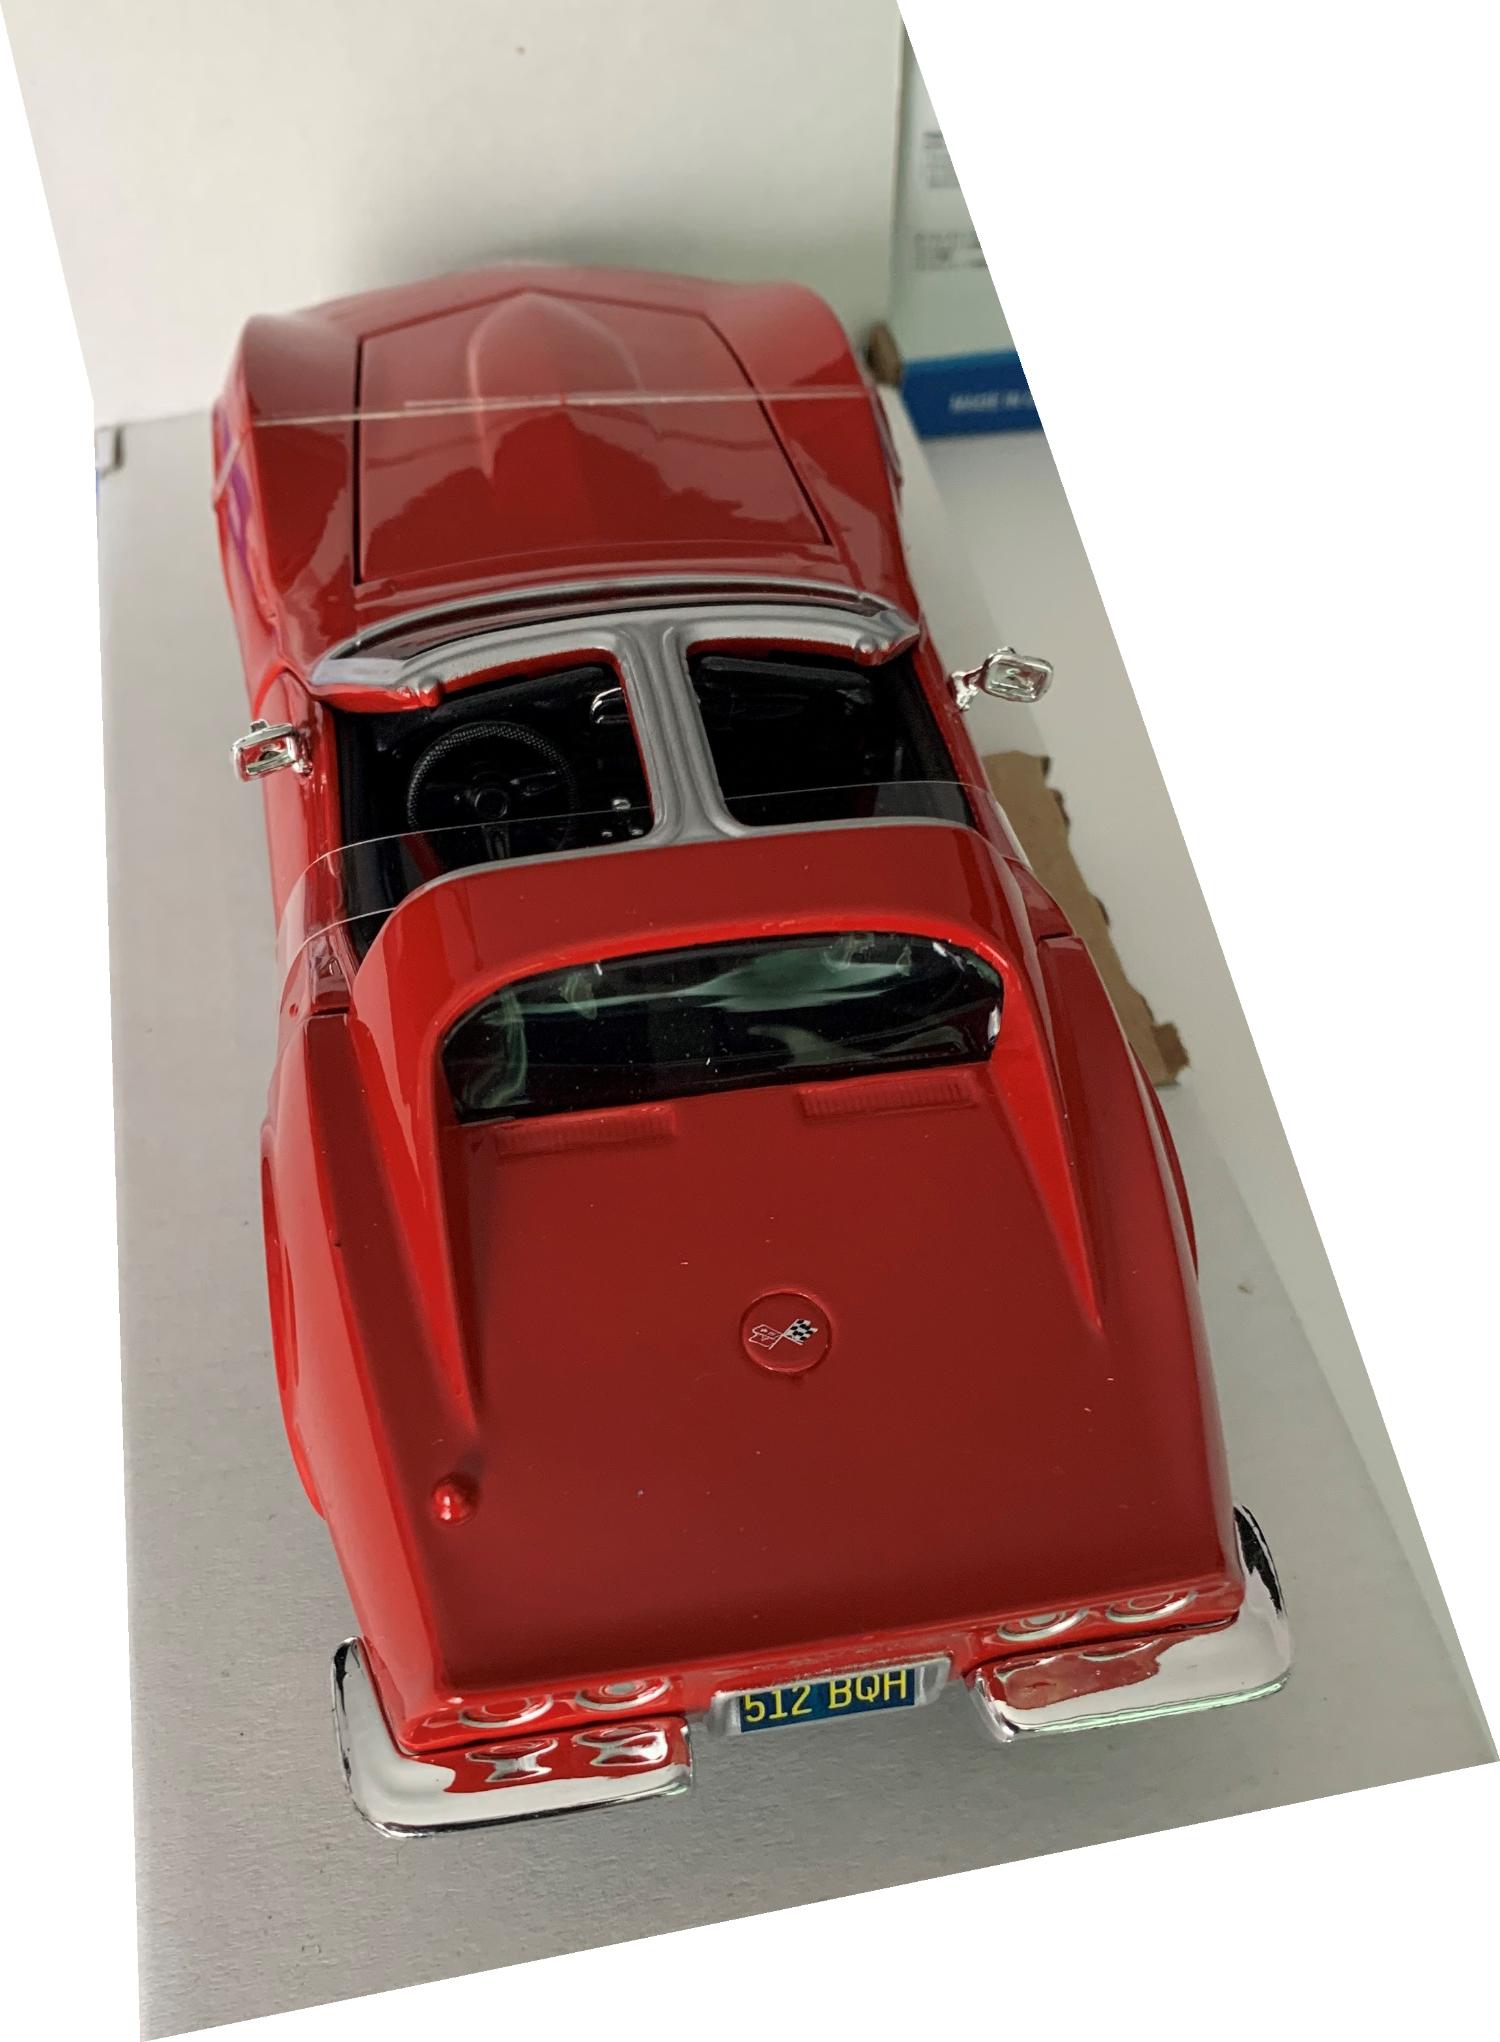 Chevrolet Corvette Stingray 1970 in red 1:24 scale model from Maisto